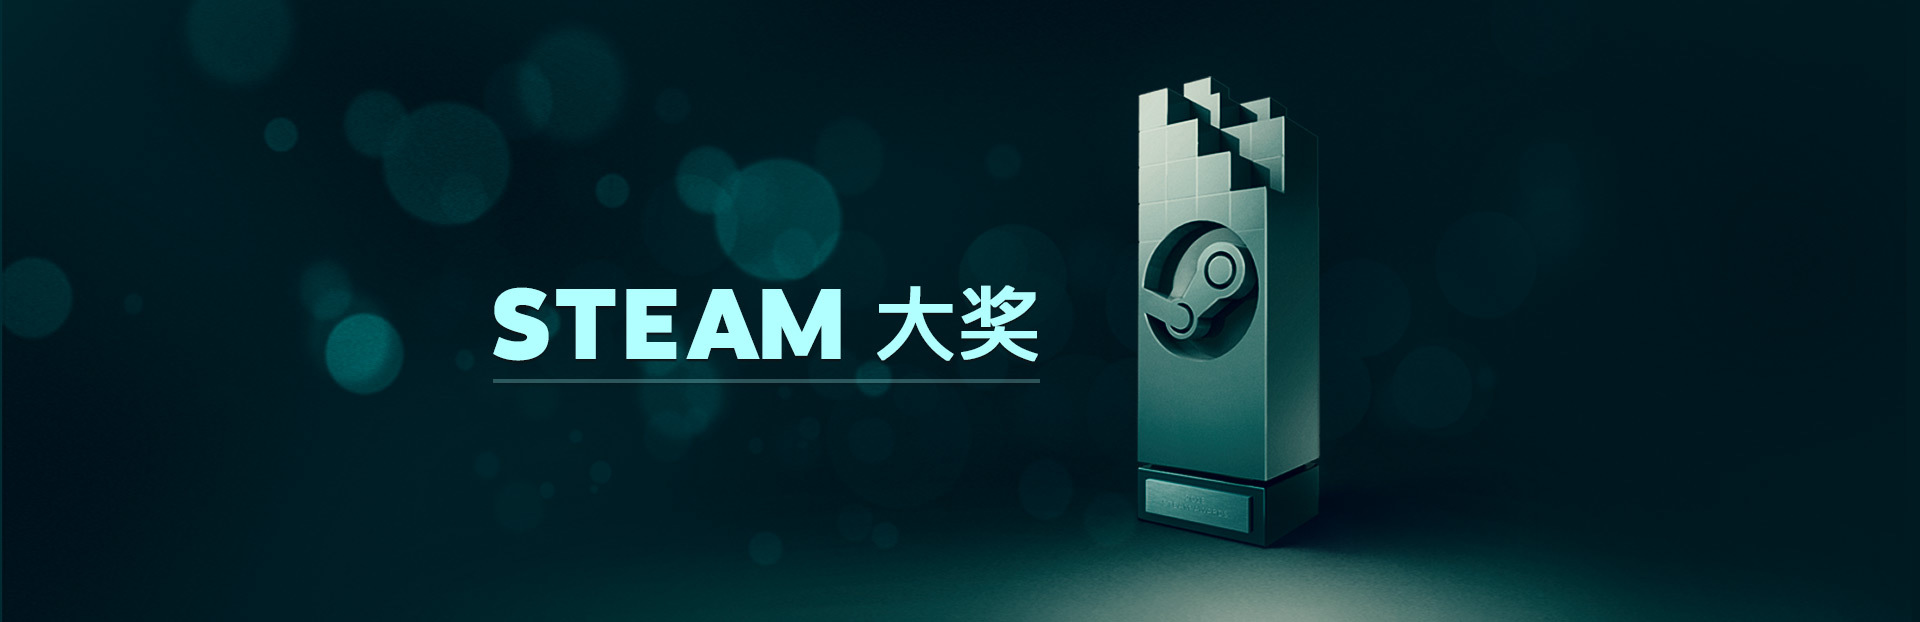 Steam冬季特卖时间确定 大奖提名今日开始逐步公开